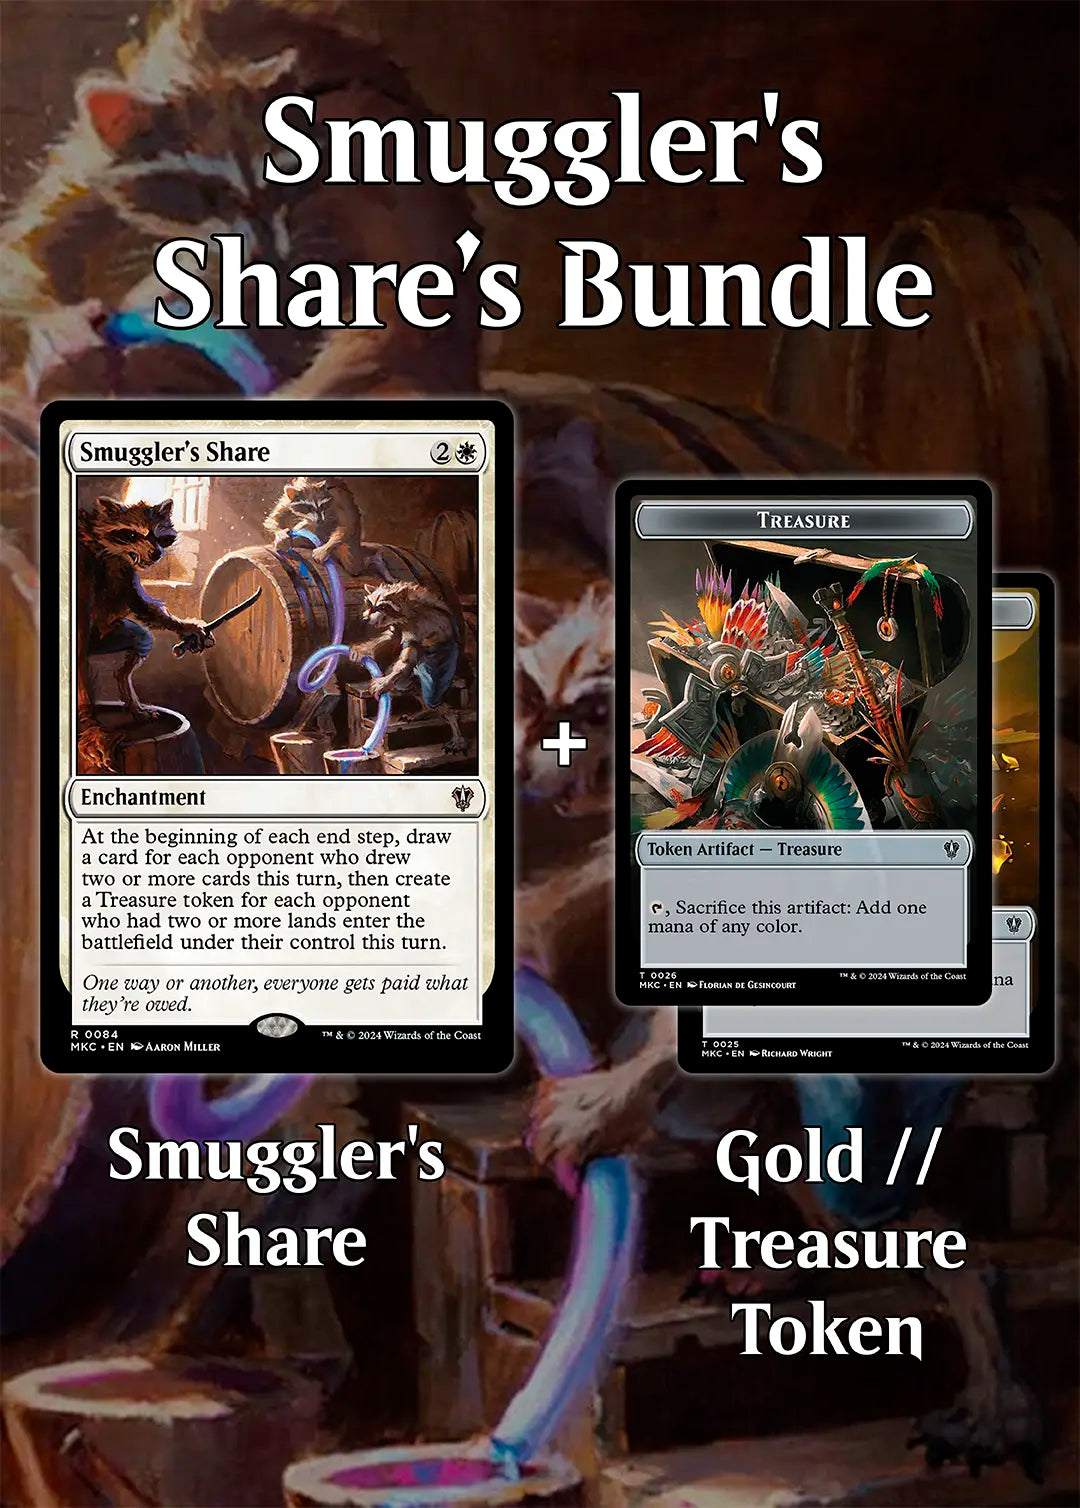 Smuggler's Share's Bundle - Gold // Treasure Token